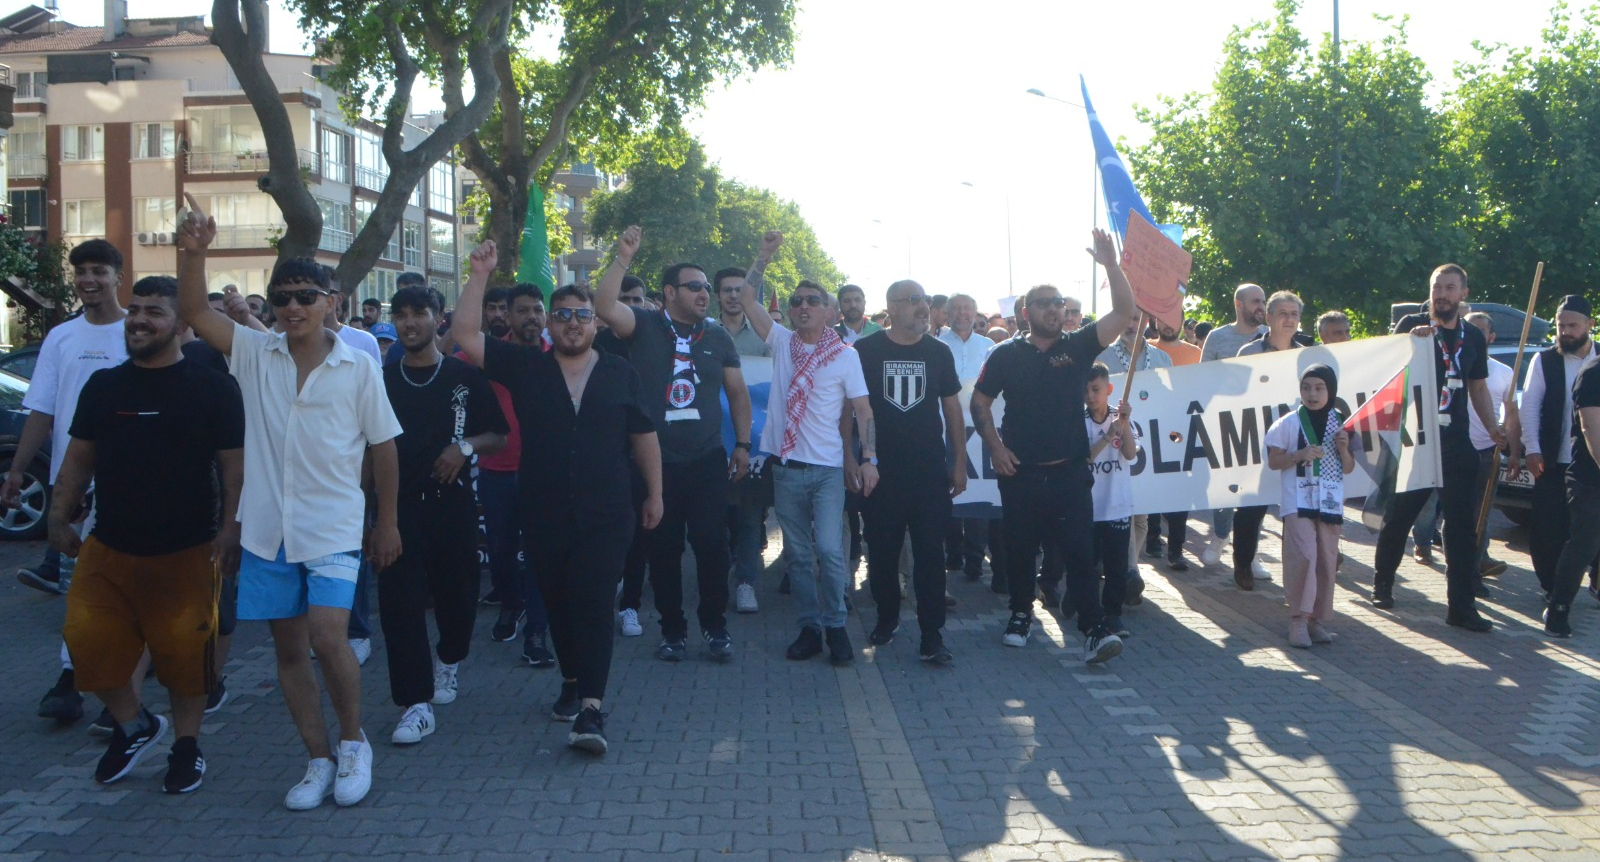 Yalova Besiktas Fenerbahce Galatasaray Yalovaspor Yesilovspor Gazze Israil Filistin Protesto (3) Fotor 202406032021